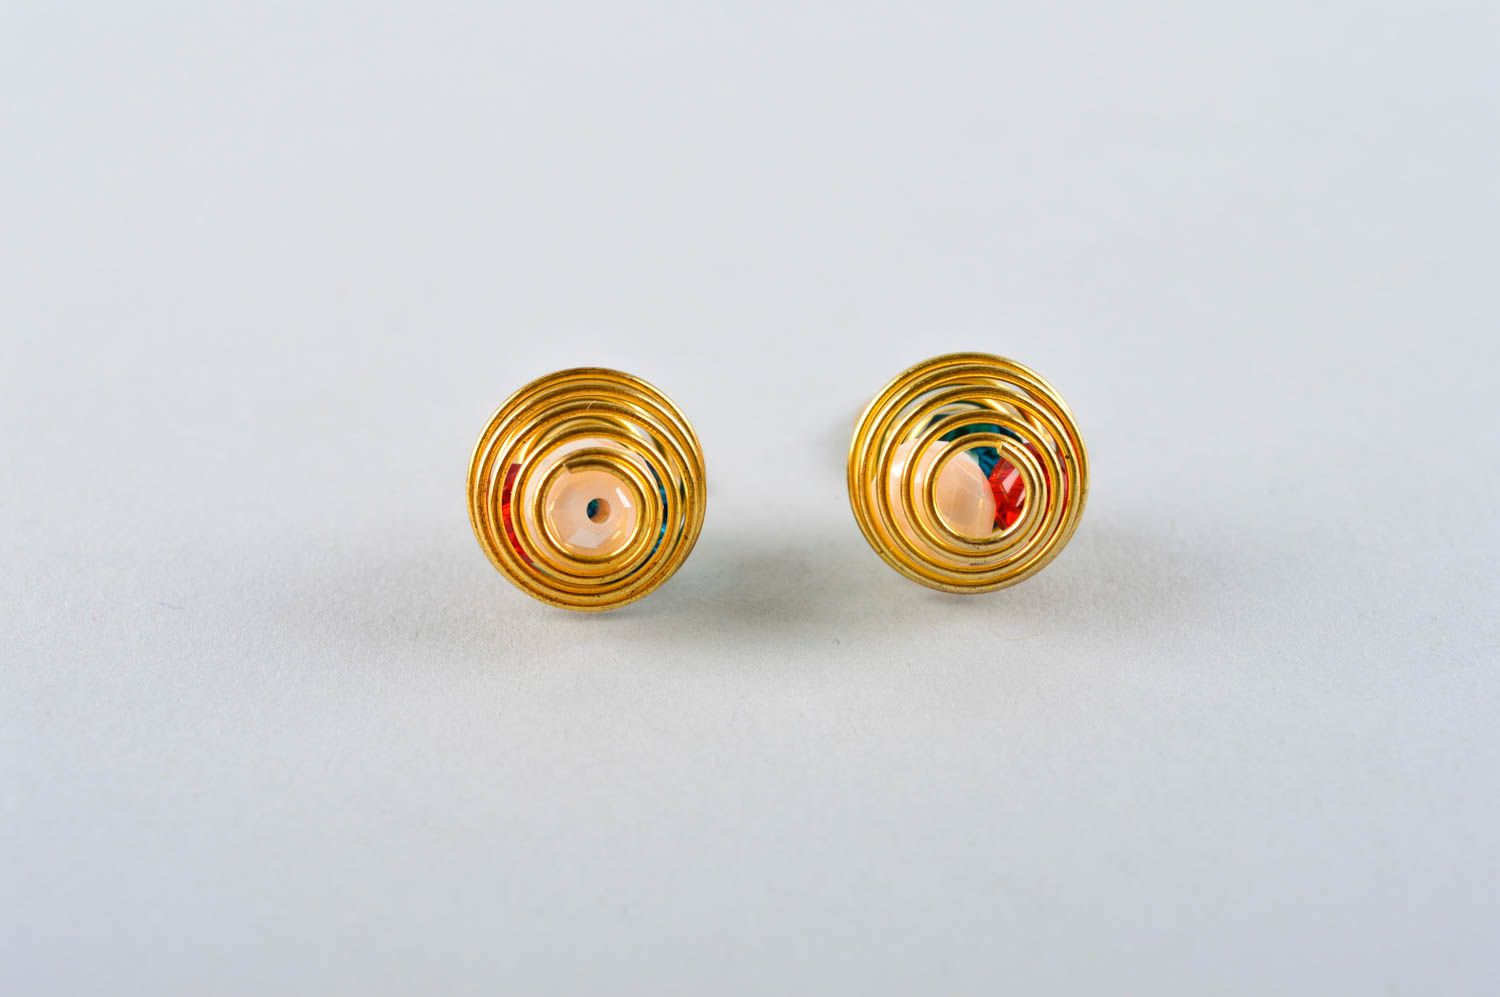 Cute earrings designer jewelry handmade earrings womens accessories gift ideas photo 3